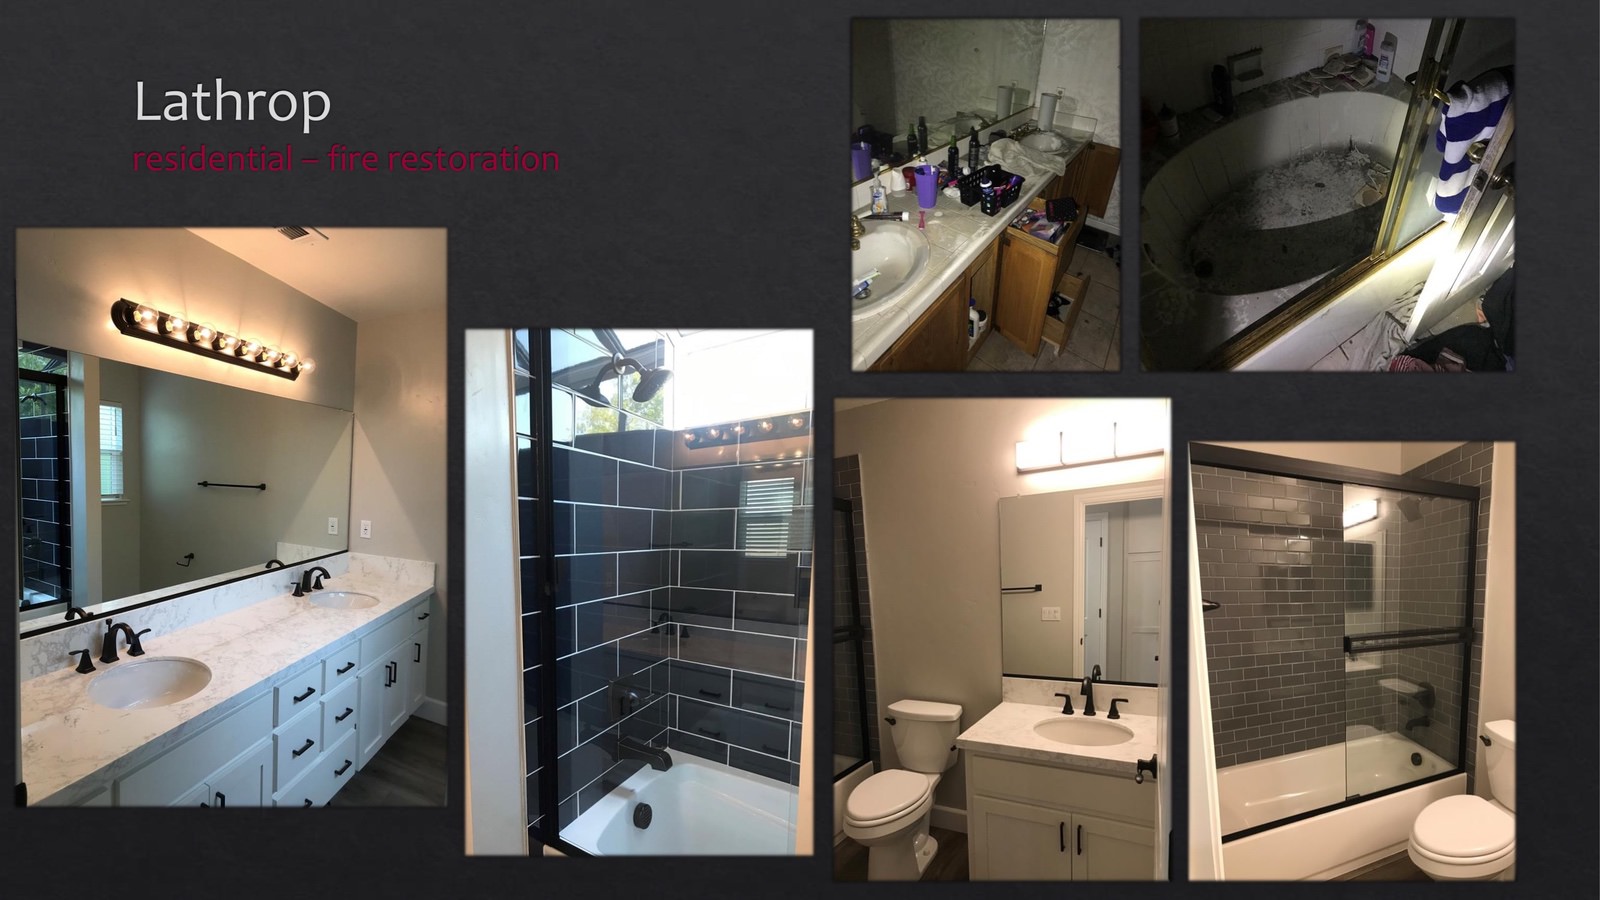 Lathrop Residential fire restoration - bathroom - lightbox